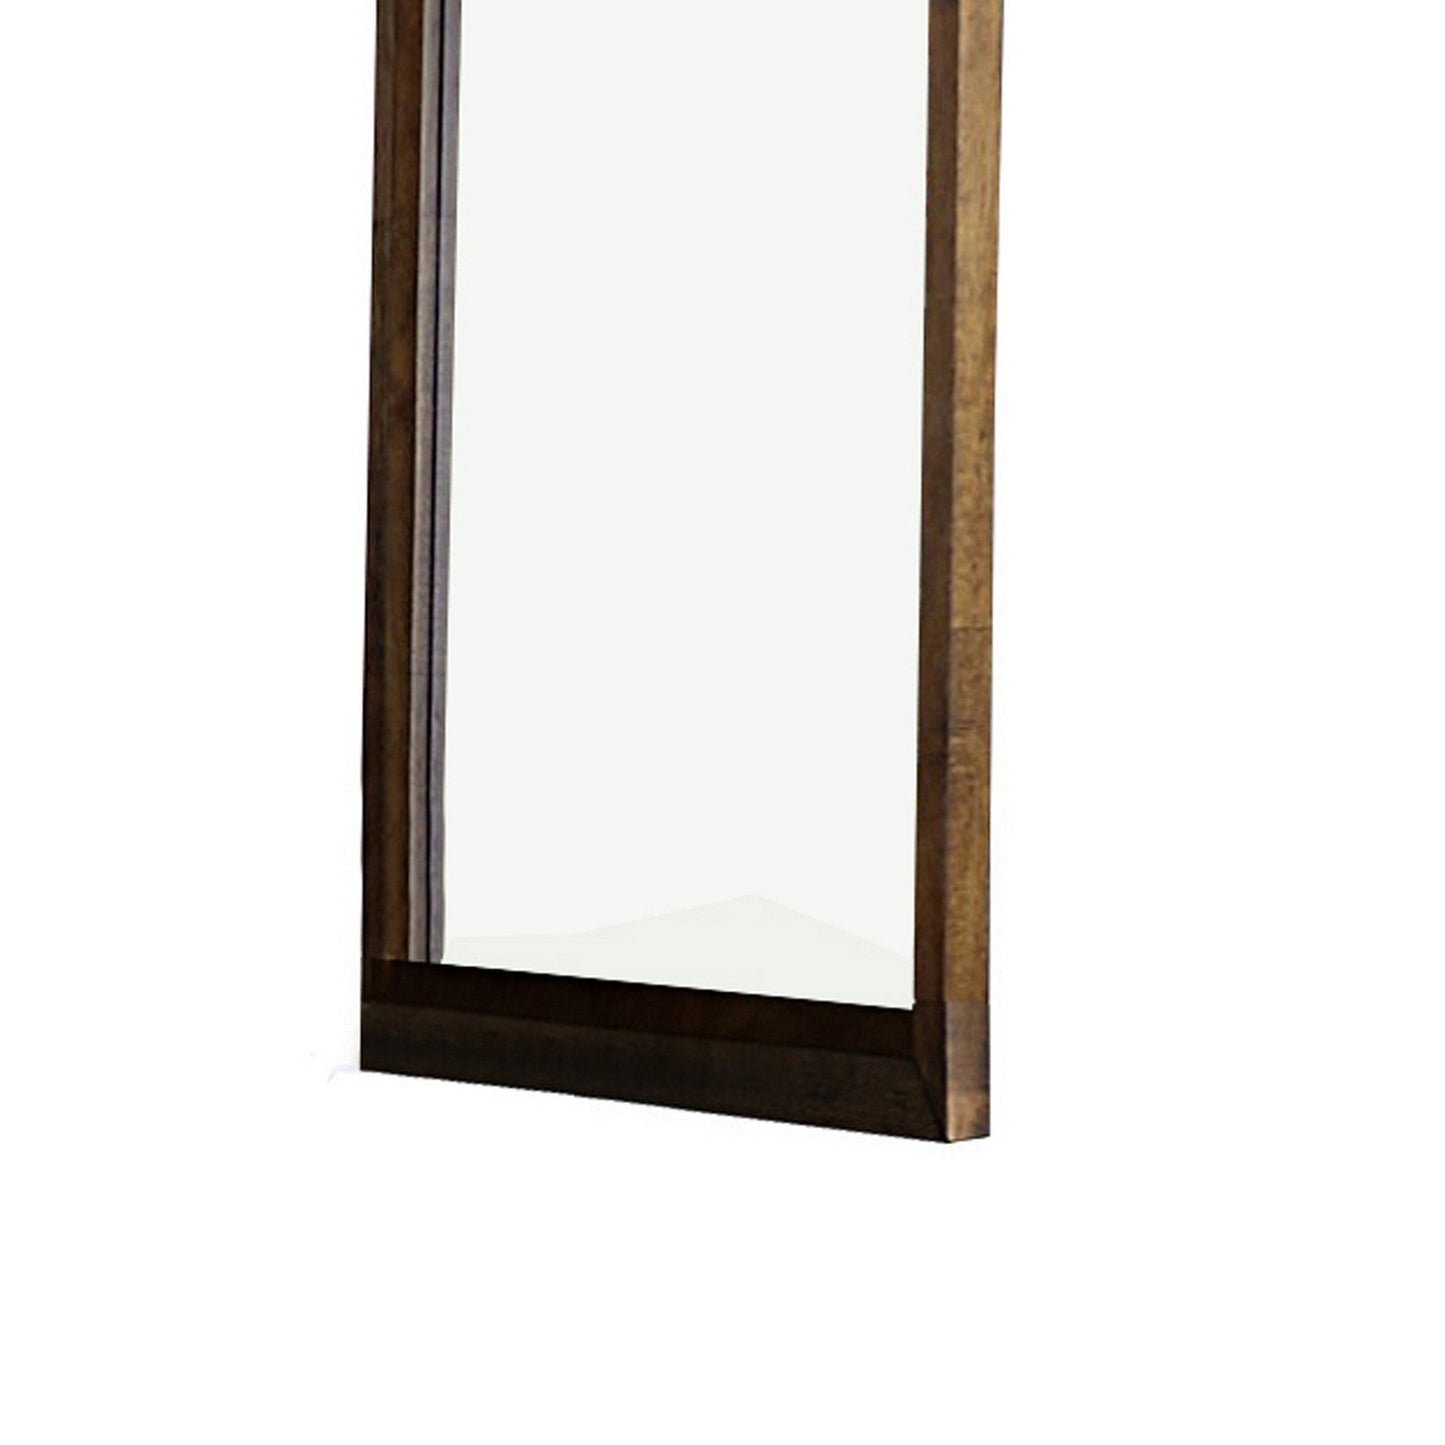 Benzara Brown Transitional Rectangular Wooden Framed Mirror With Grain Details